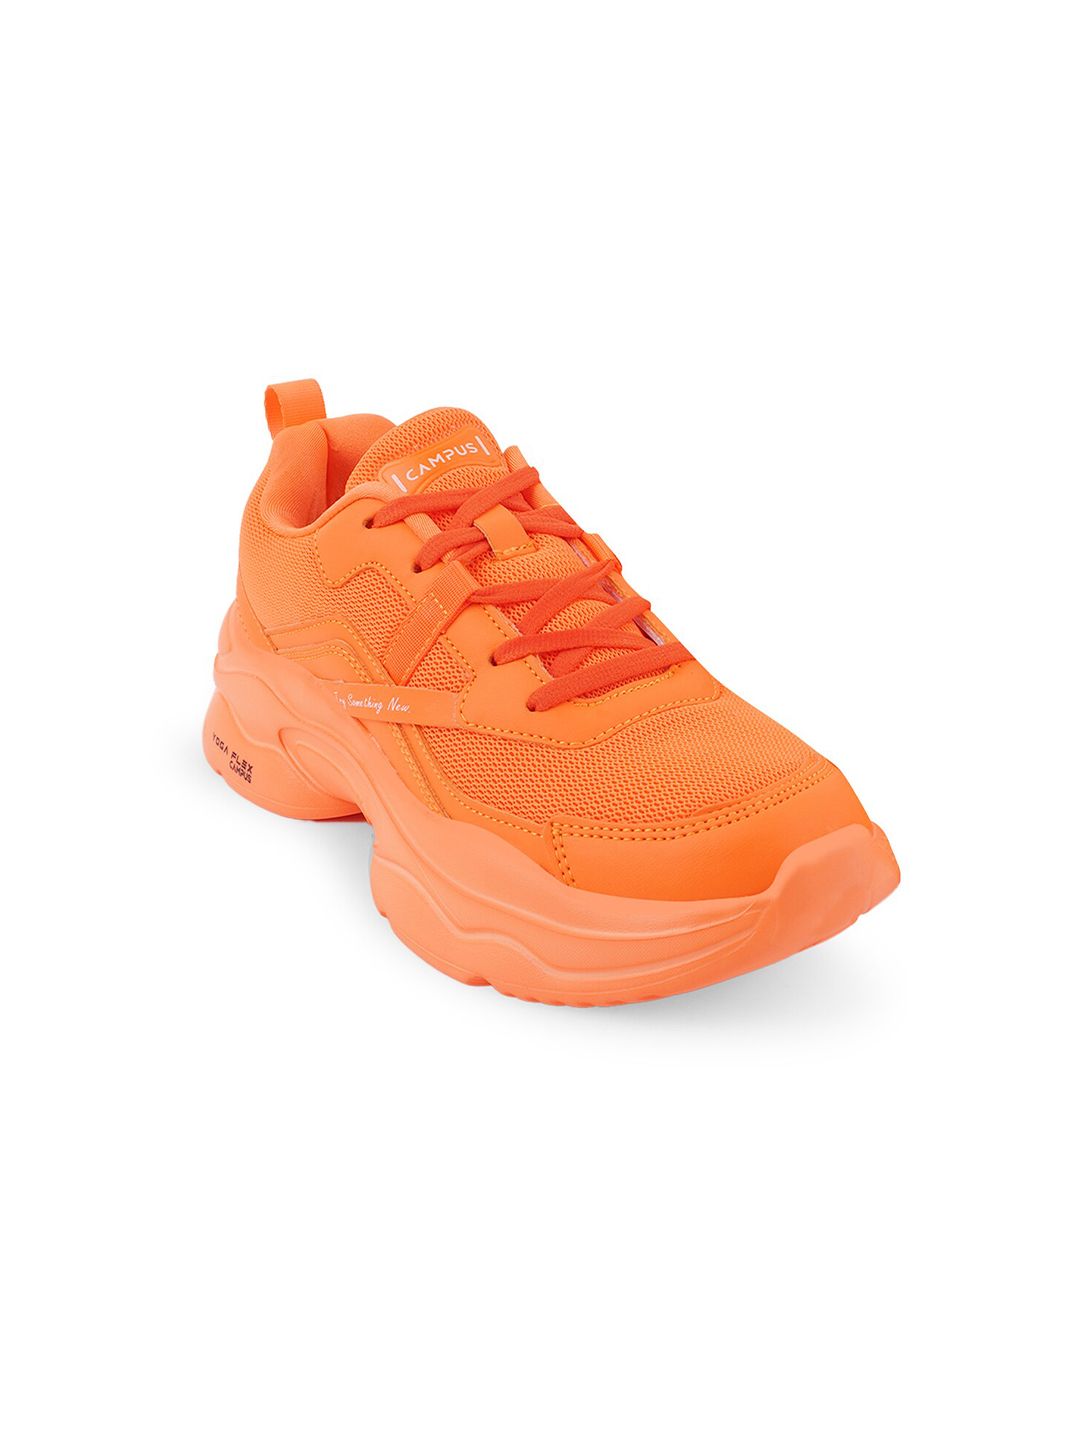 Campus Women Orange Mesh Running Shoes Price in India